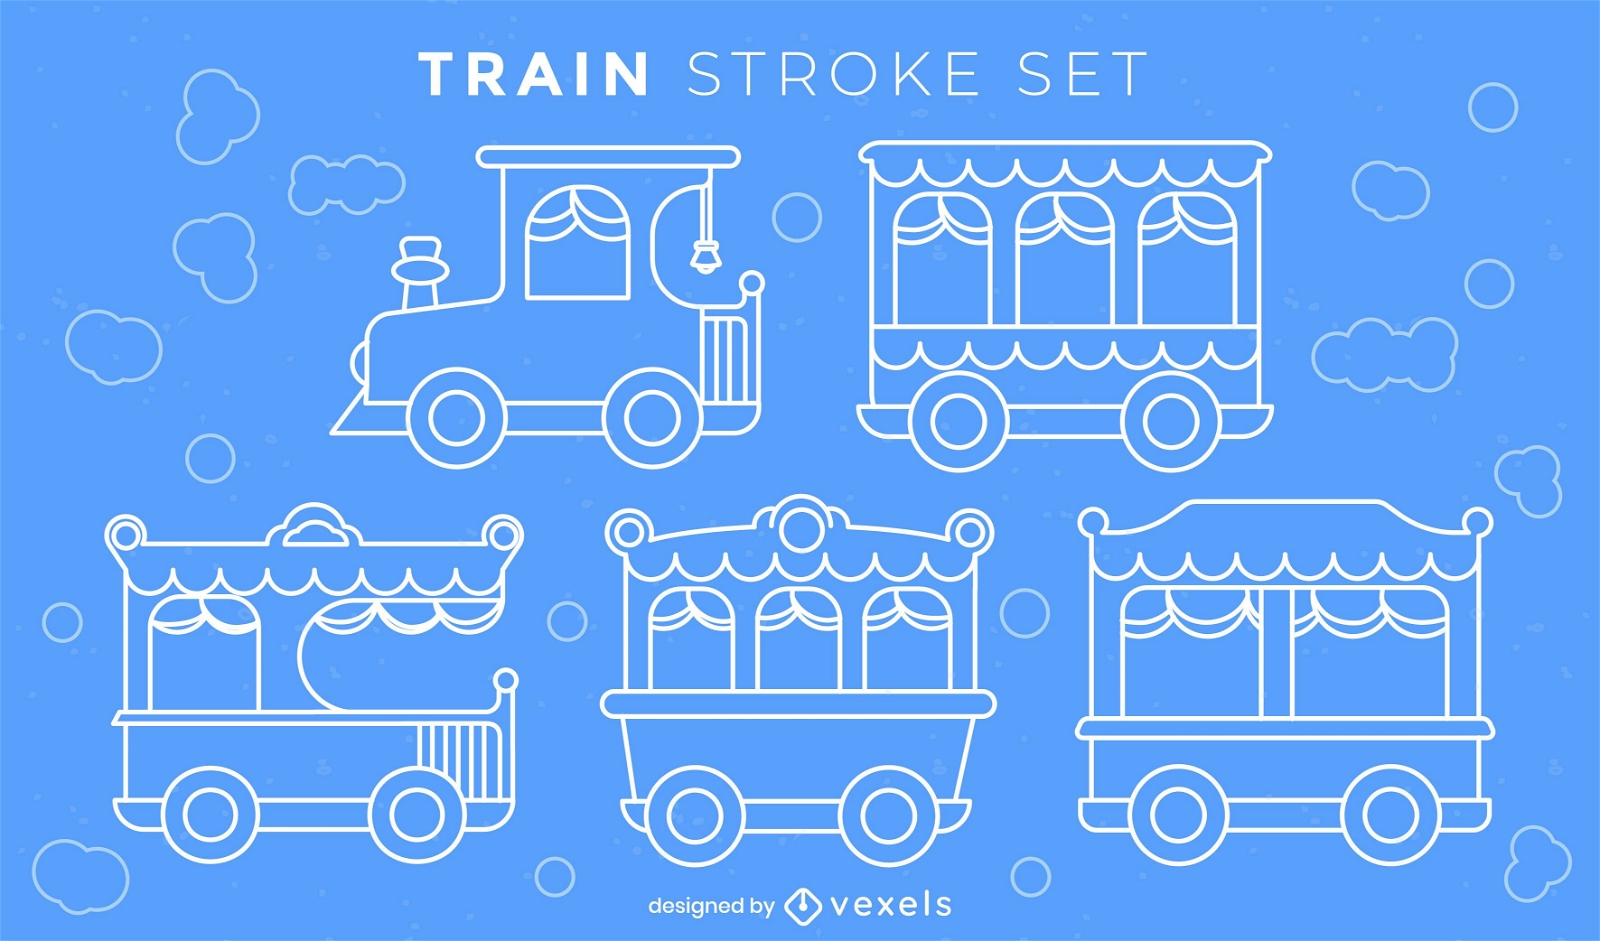 Side trains stroke set